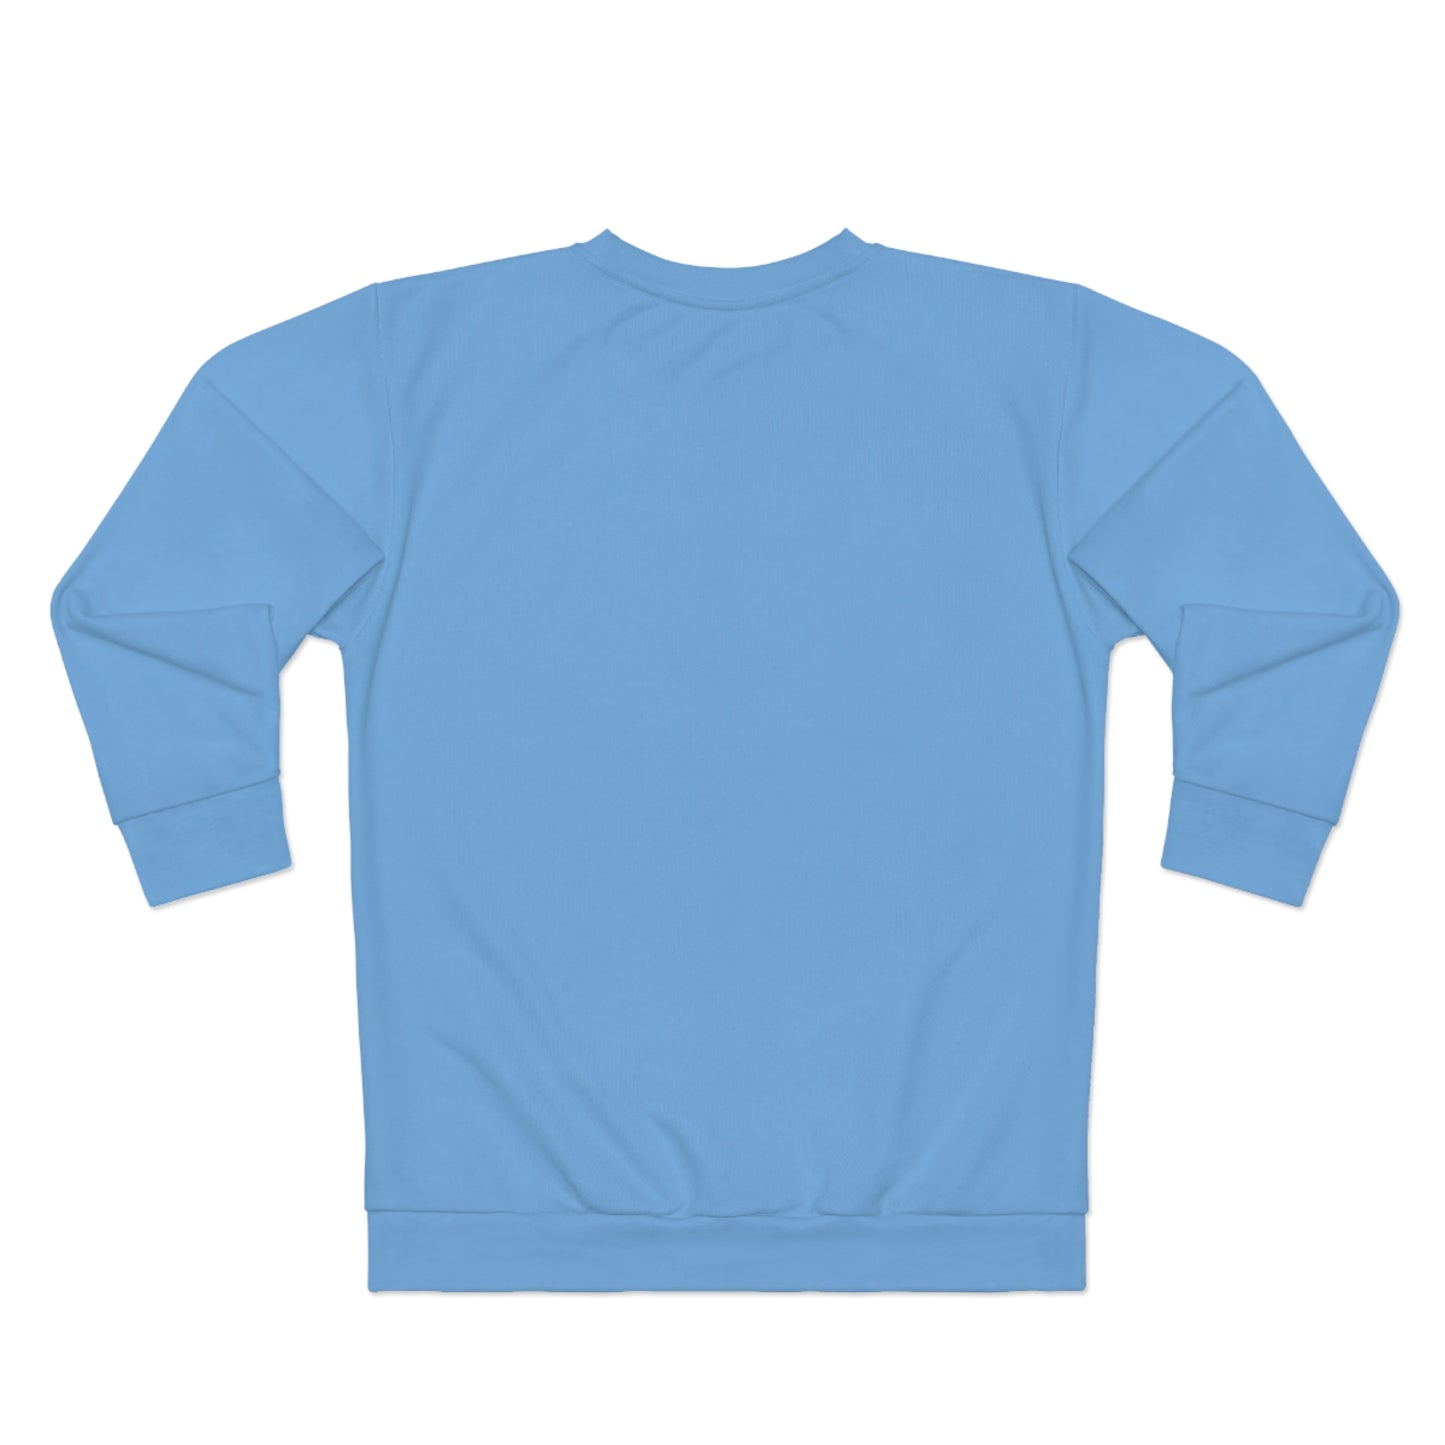 Best AOP Unisex Sweatshirt For Buy | WomenNtech